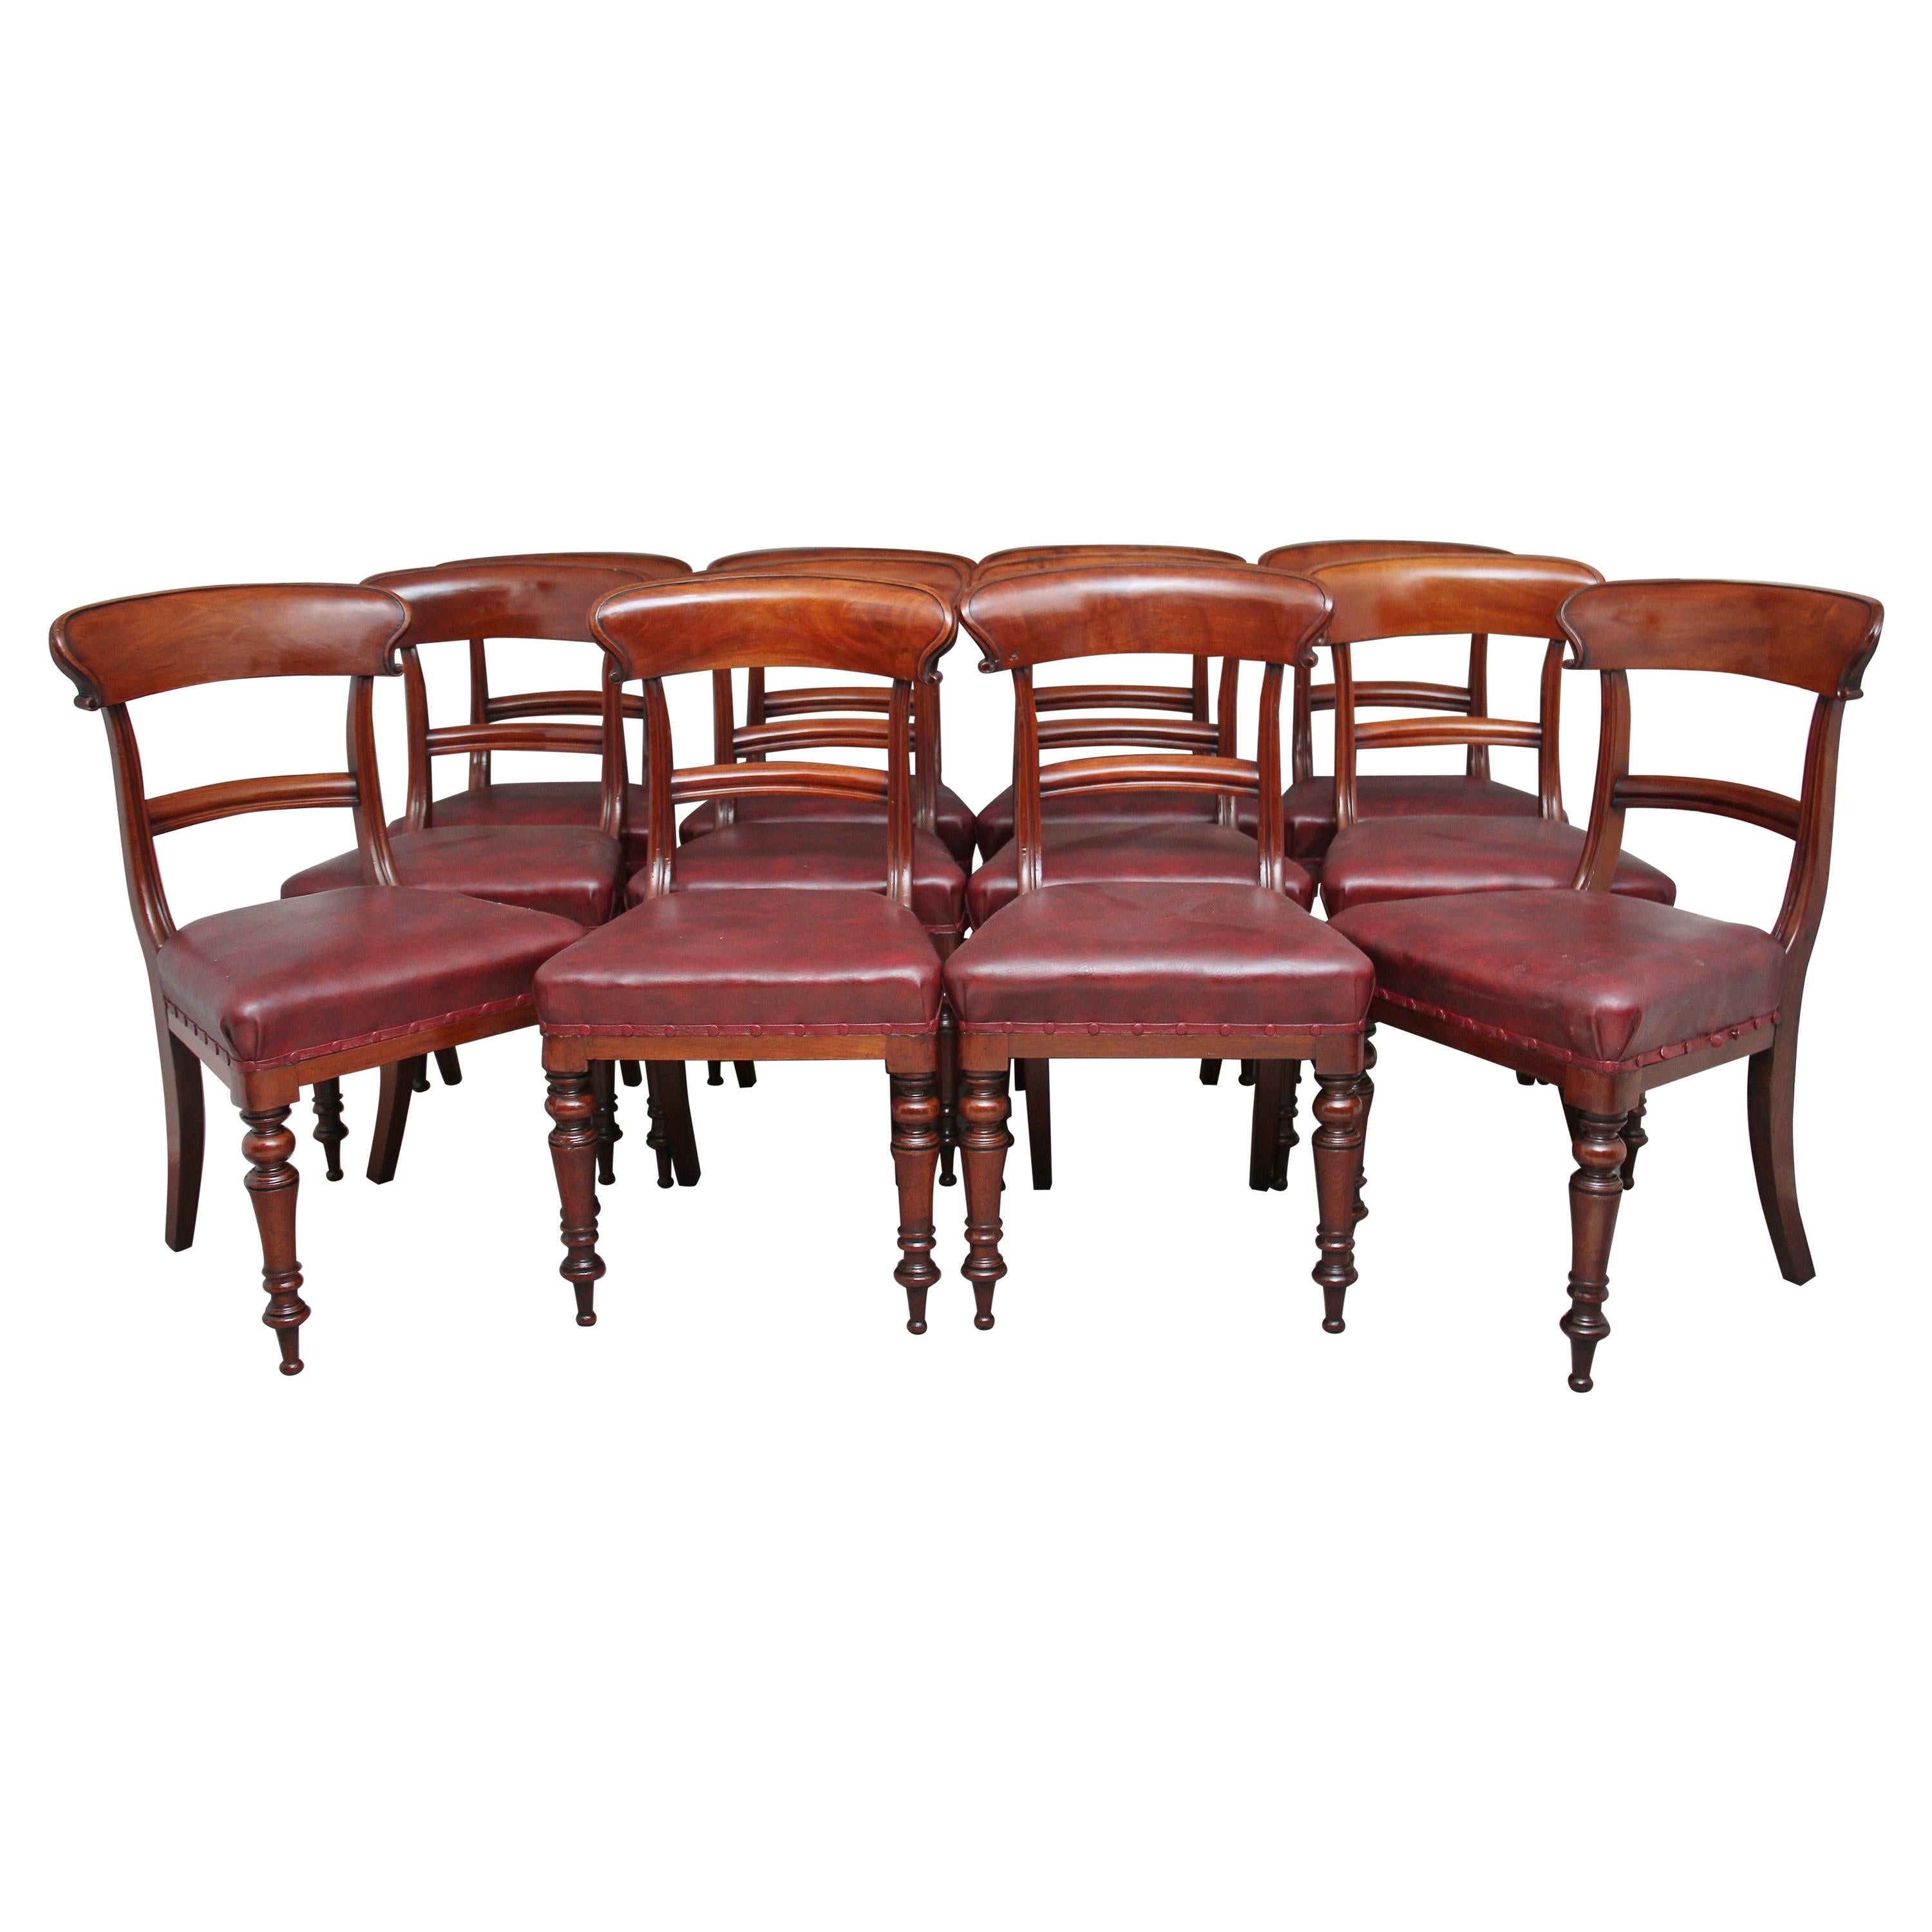 Set of Twelve 19th Century Mahogany Dining Chairs